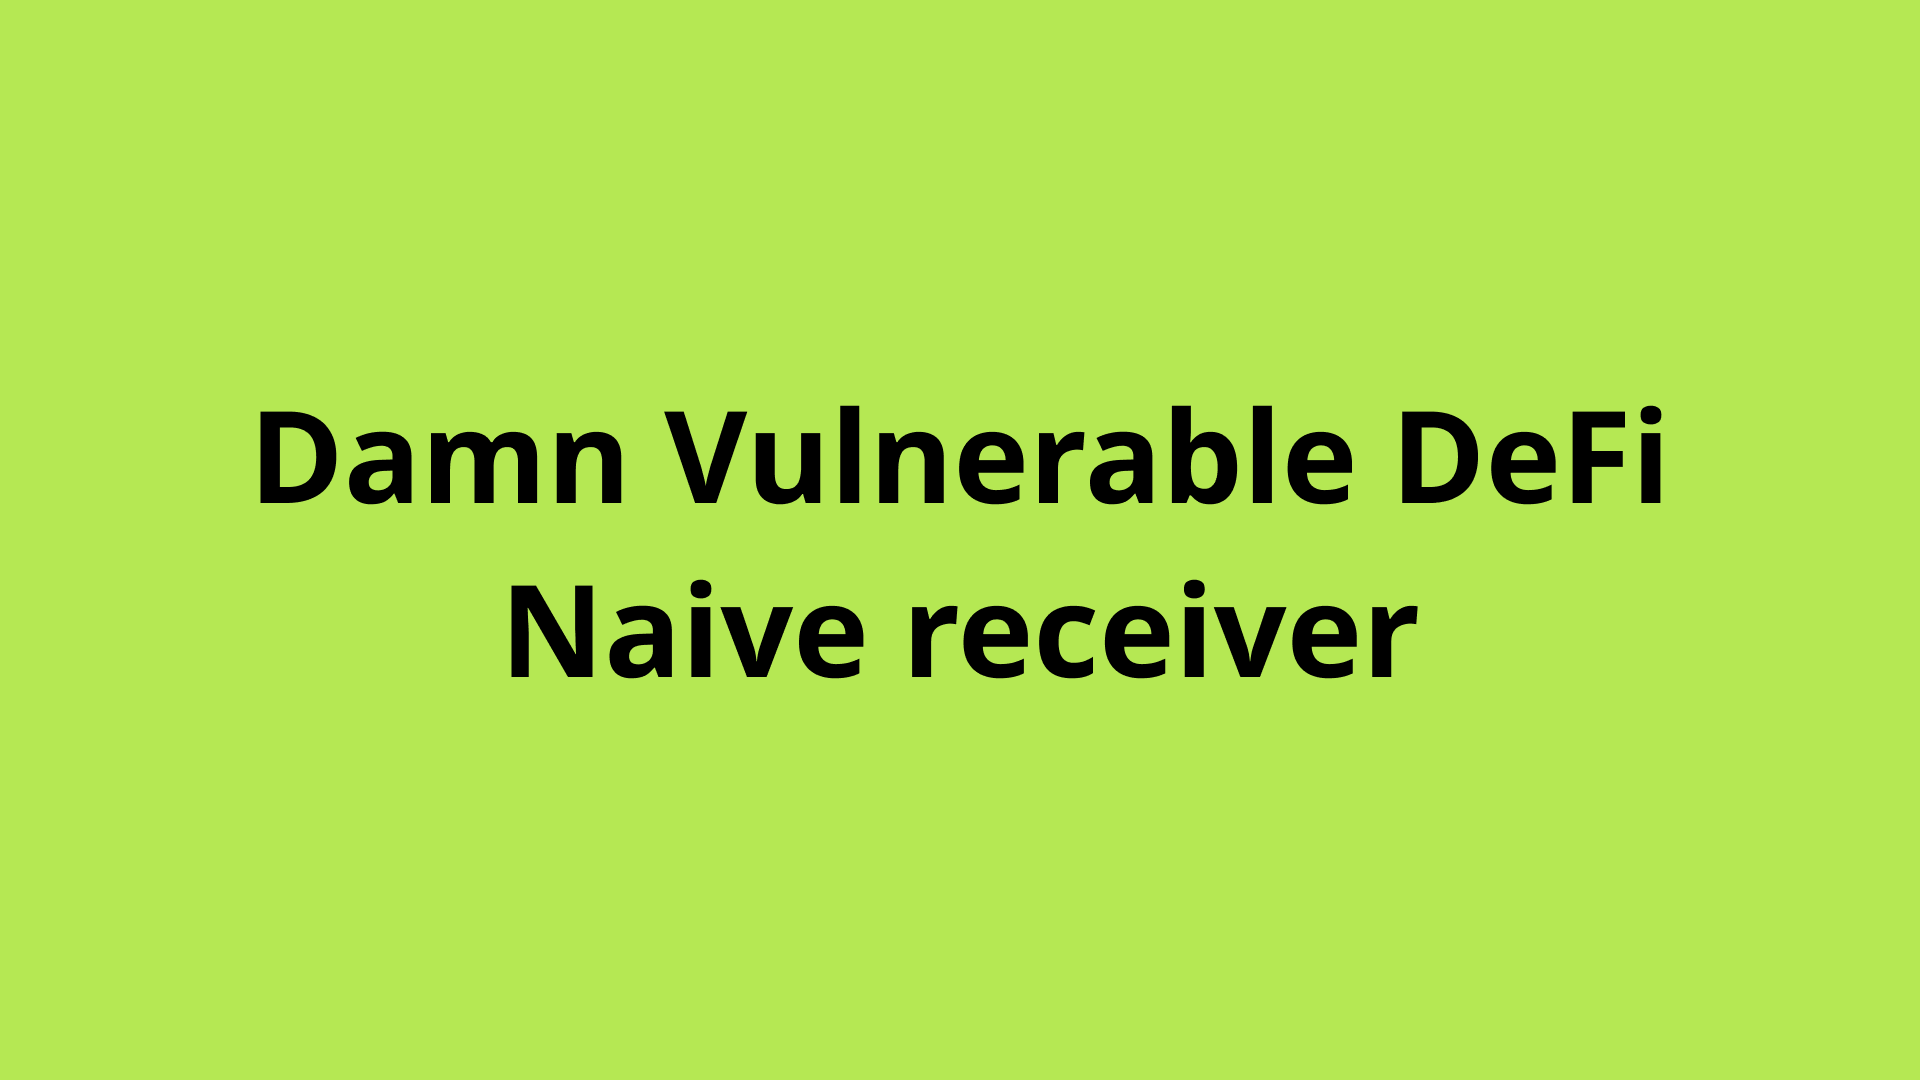 Damn Vulnerable DeFi - Naive receiver